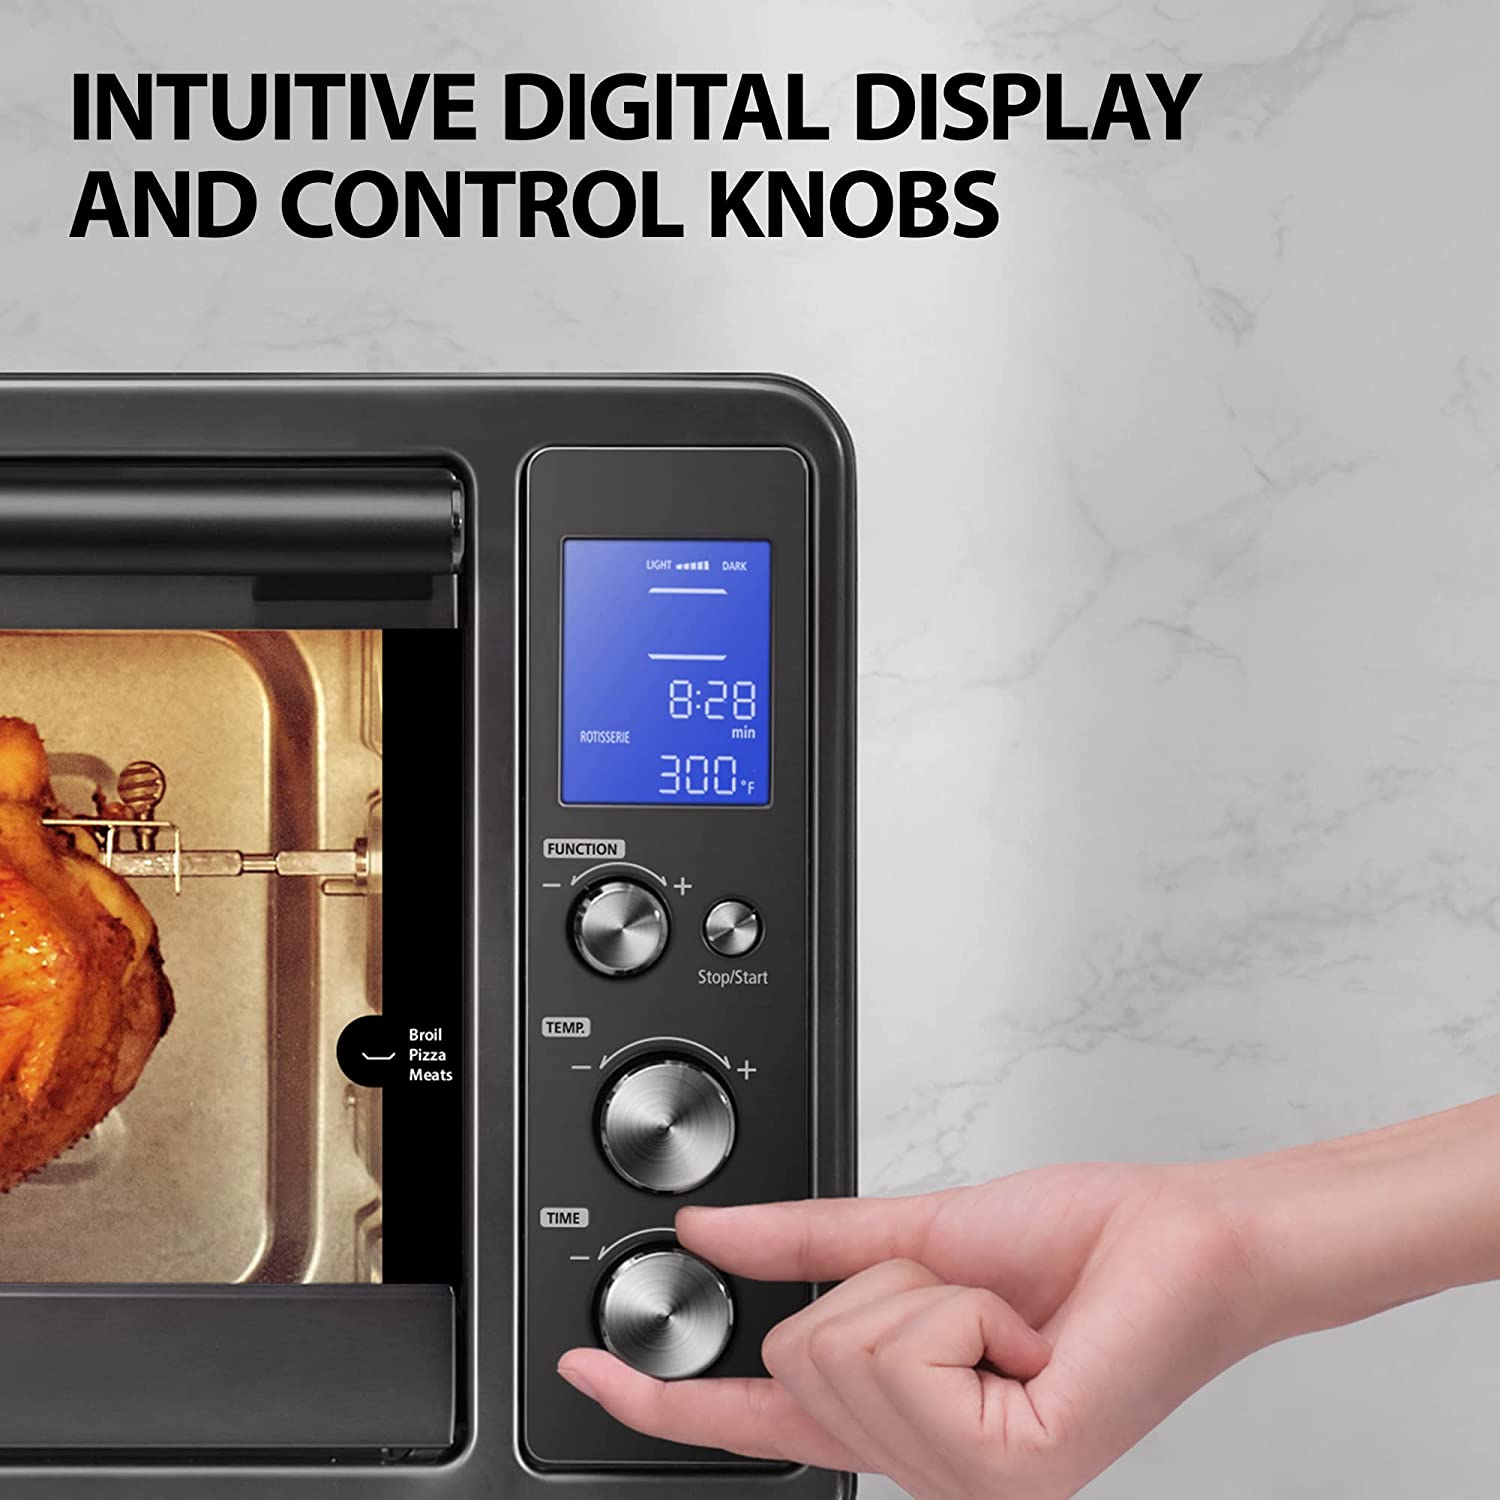 Black + Decker 6-Slice Digital Toaster Oven